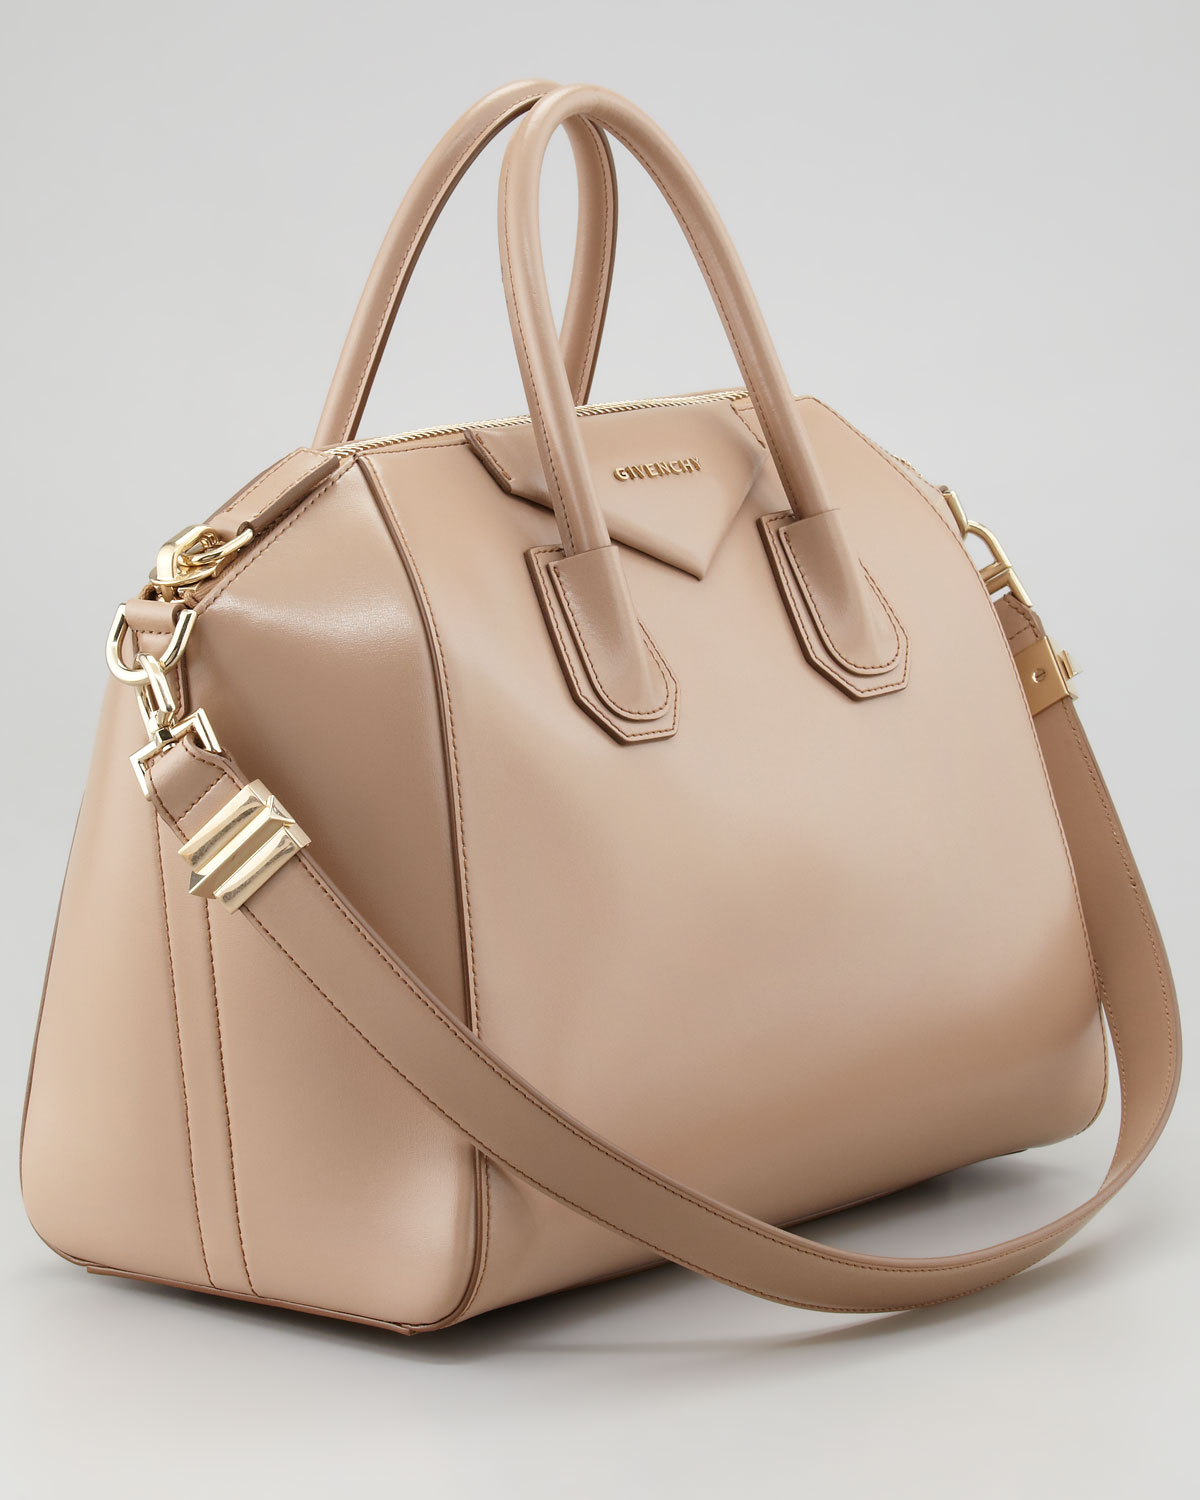 Givenchy Antigona Medium Satchel Bag L in Natural - Lyst